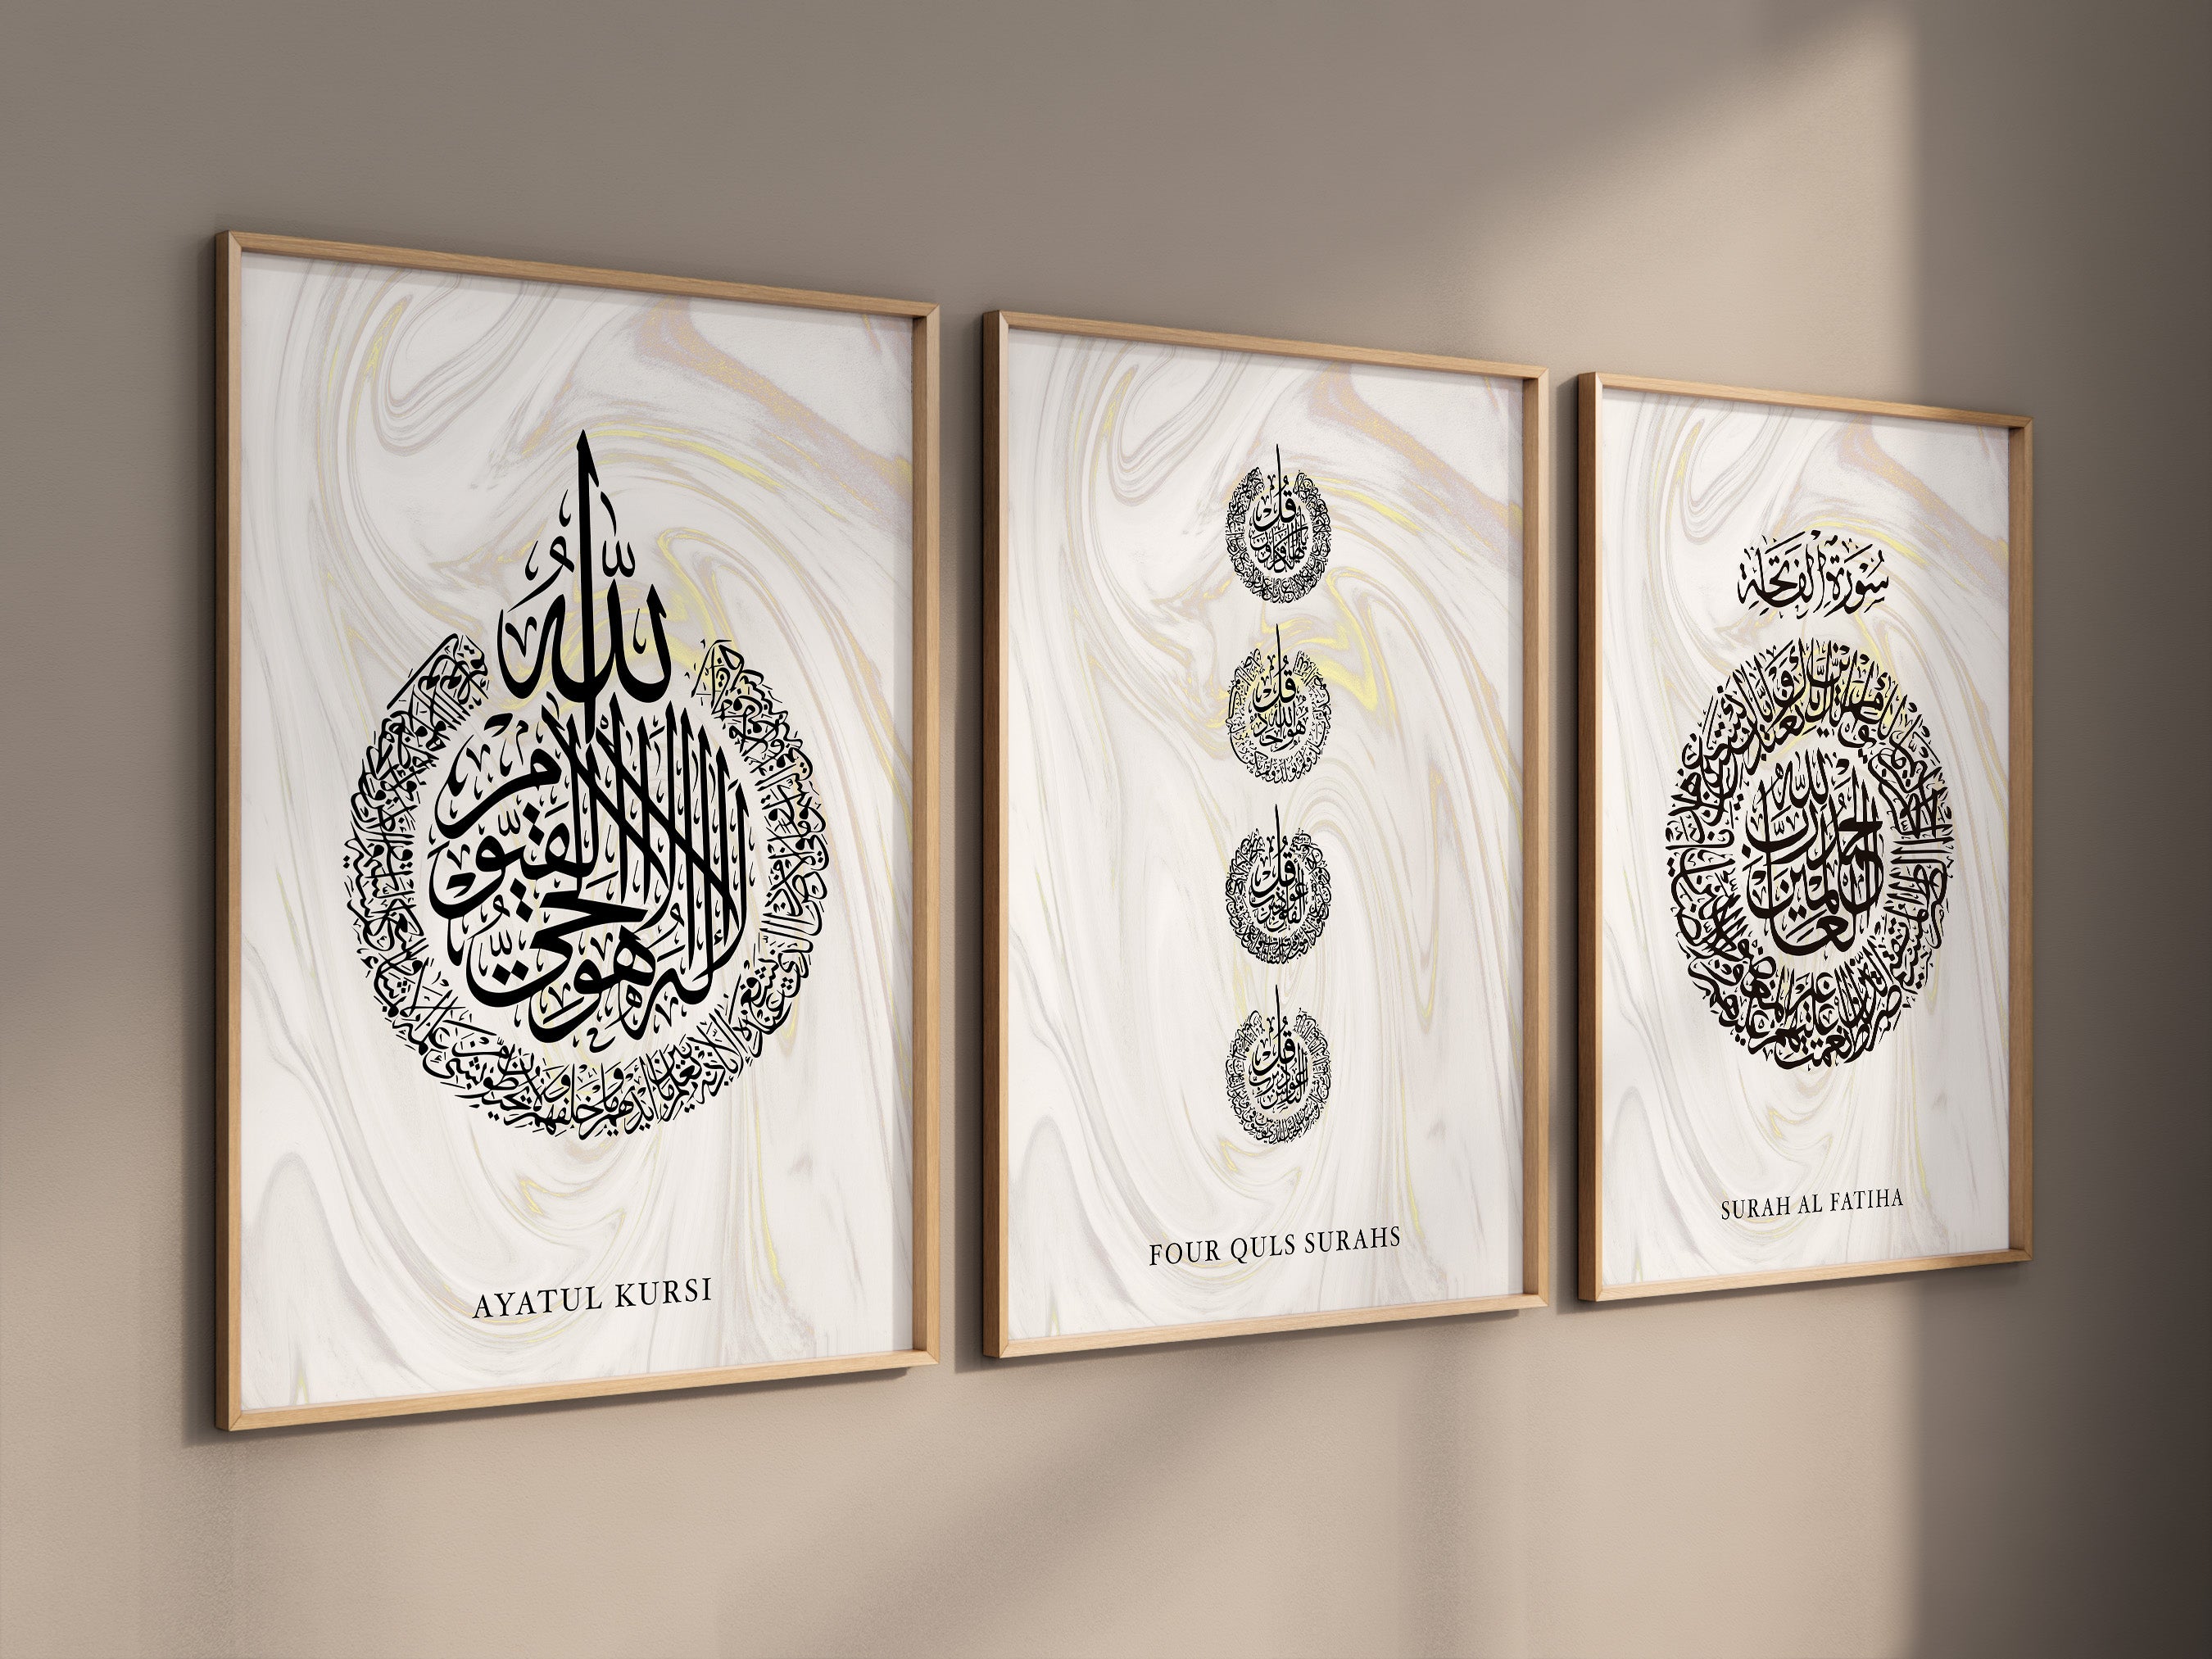 Set of 3 Ayatul Kursi, 4 Quls, Surah Al Fathia Abstract Art, Islamic Wall Art Print - Peaceful Arts ltd